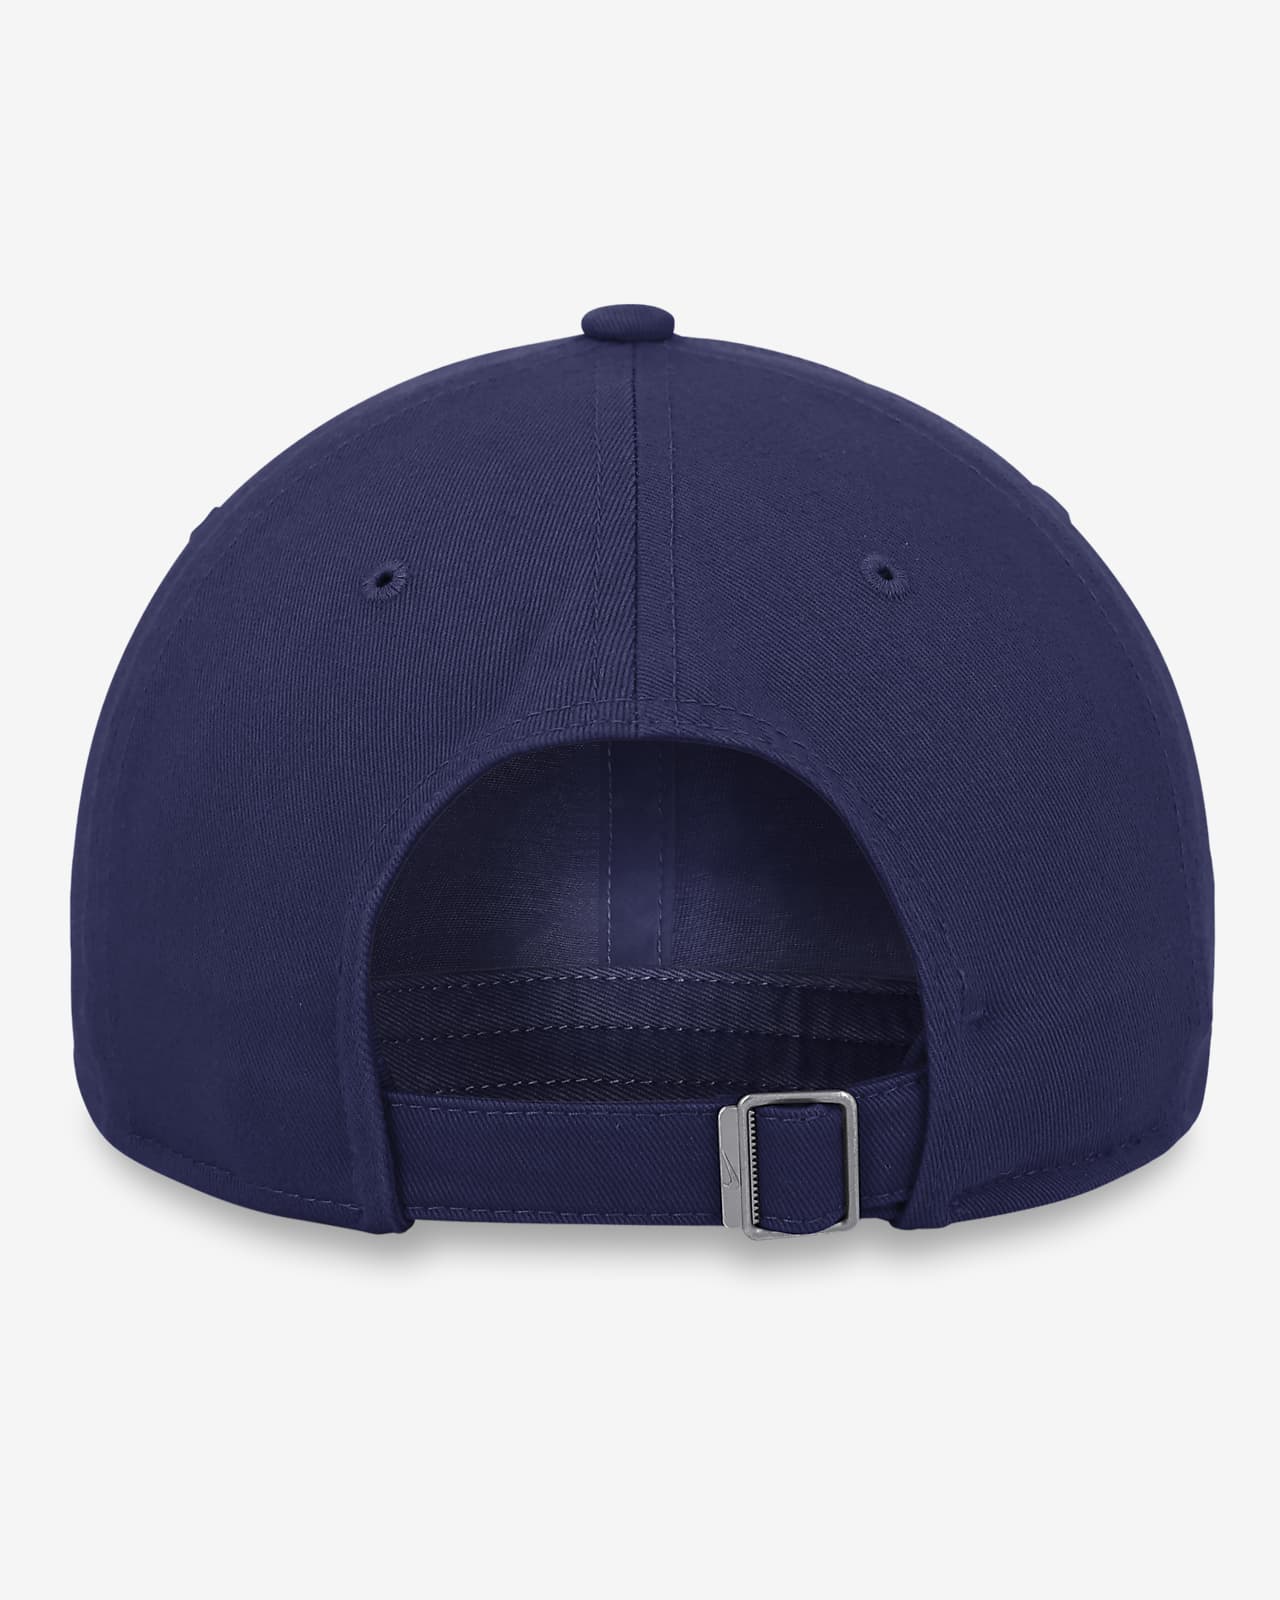 Brooklyn Dodgers Heritage86 Cooperstown Men's Nike MLB Adjustable Hat.